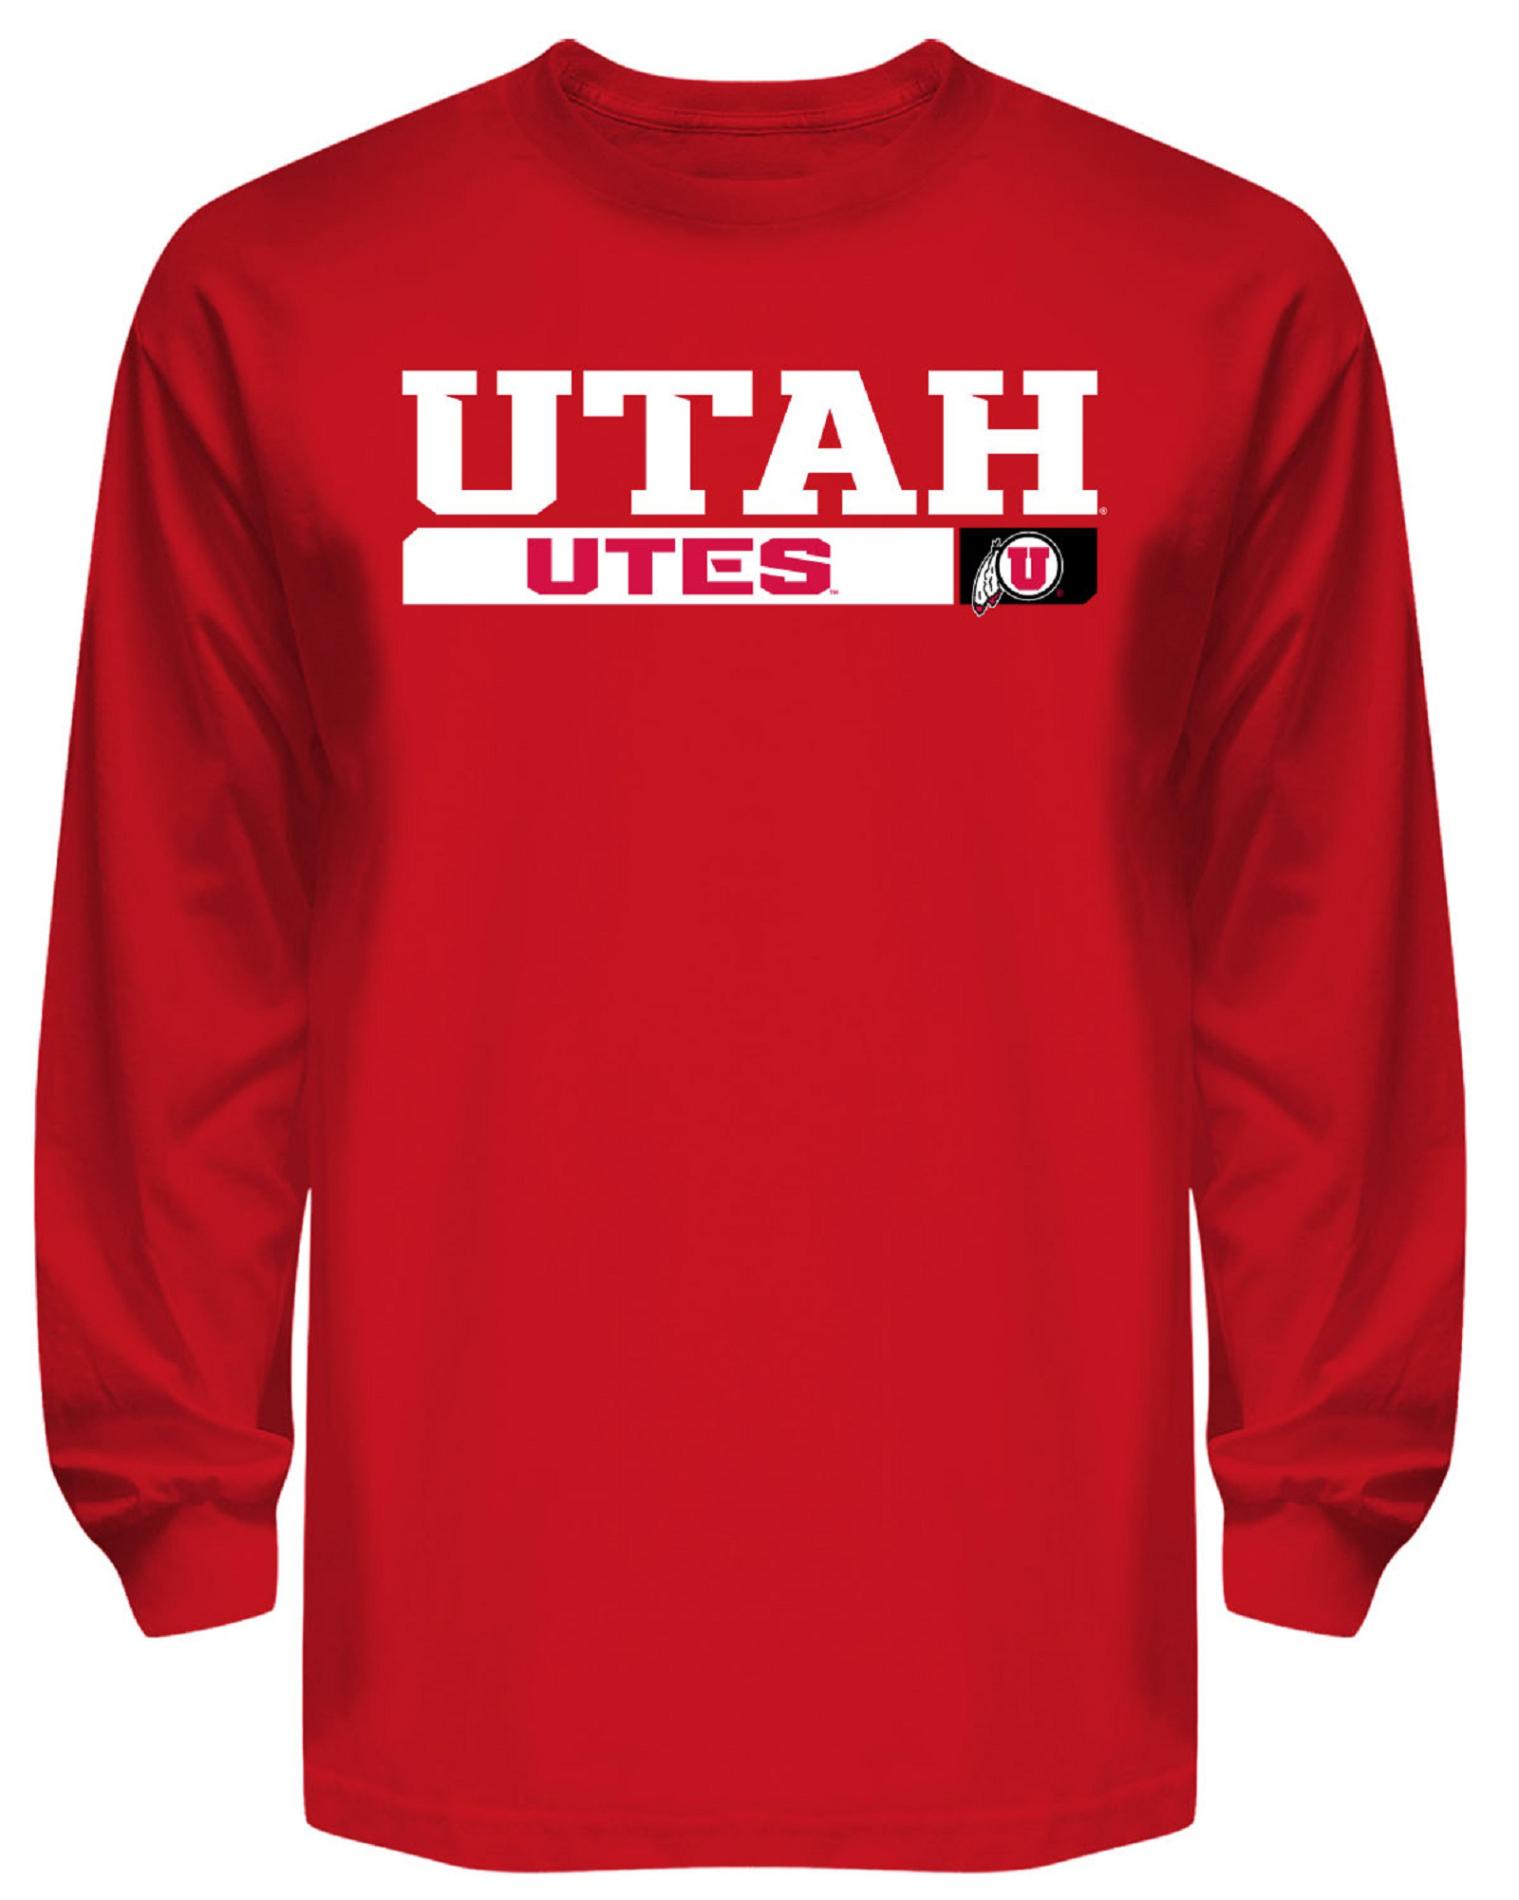 NCAA Men's Big & Tall Long-Sleeve T-Shirt - Utah Utes